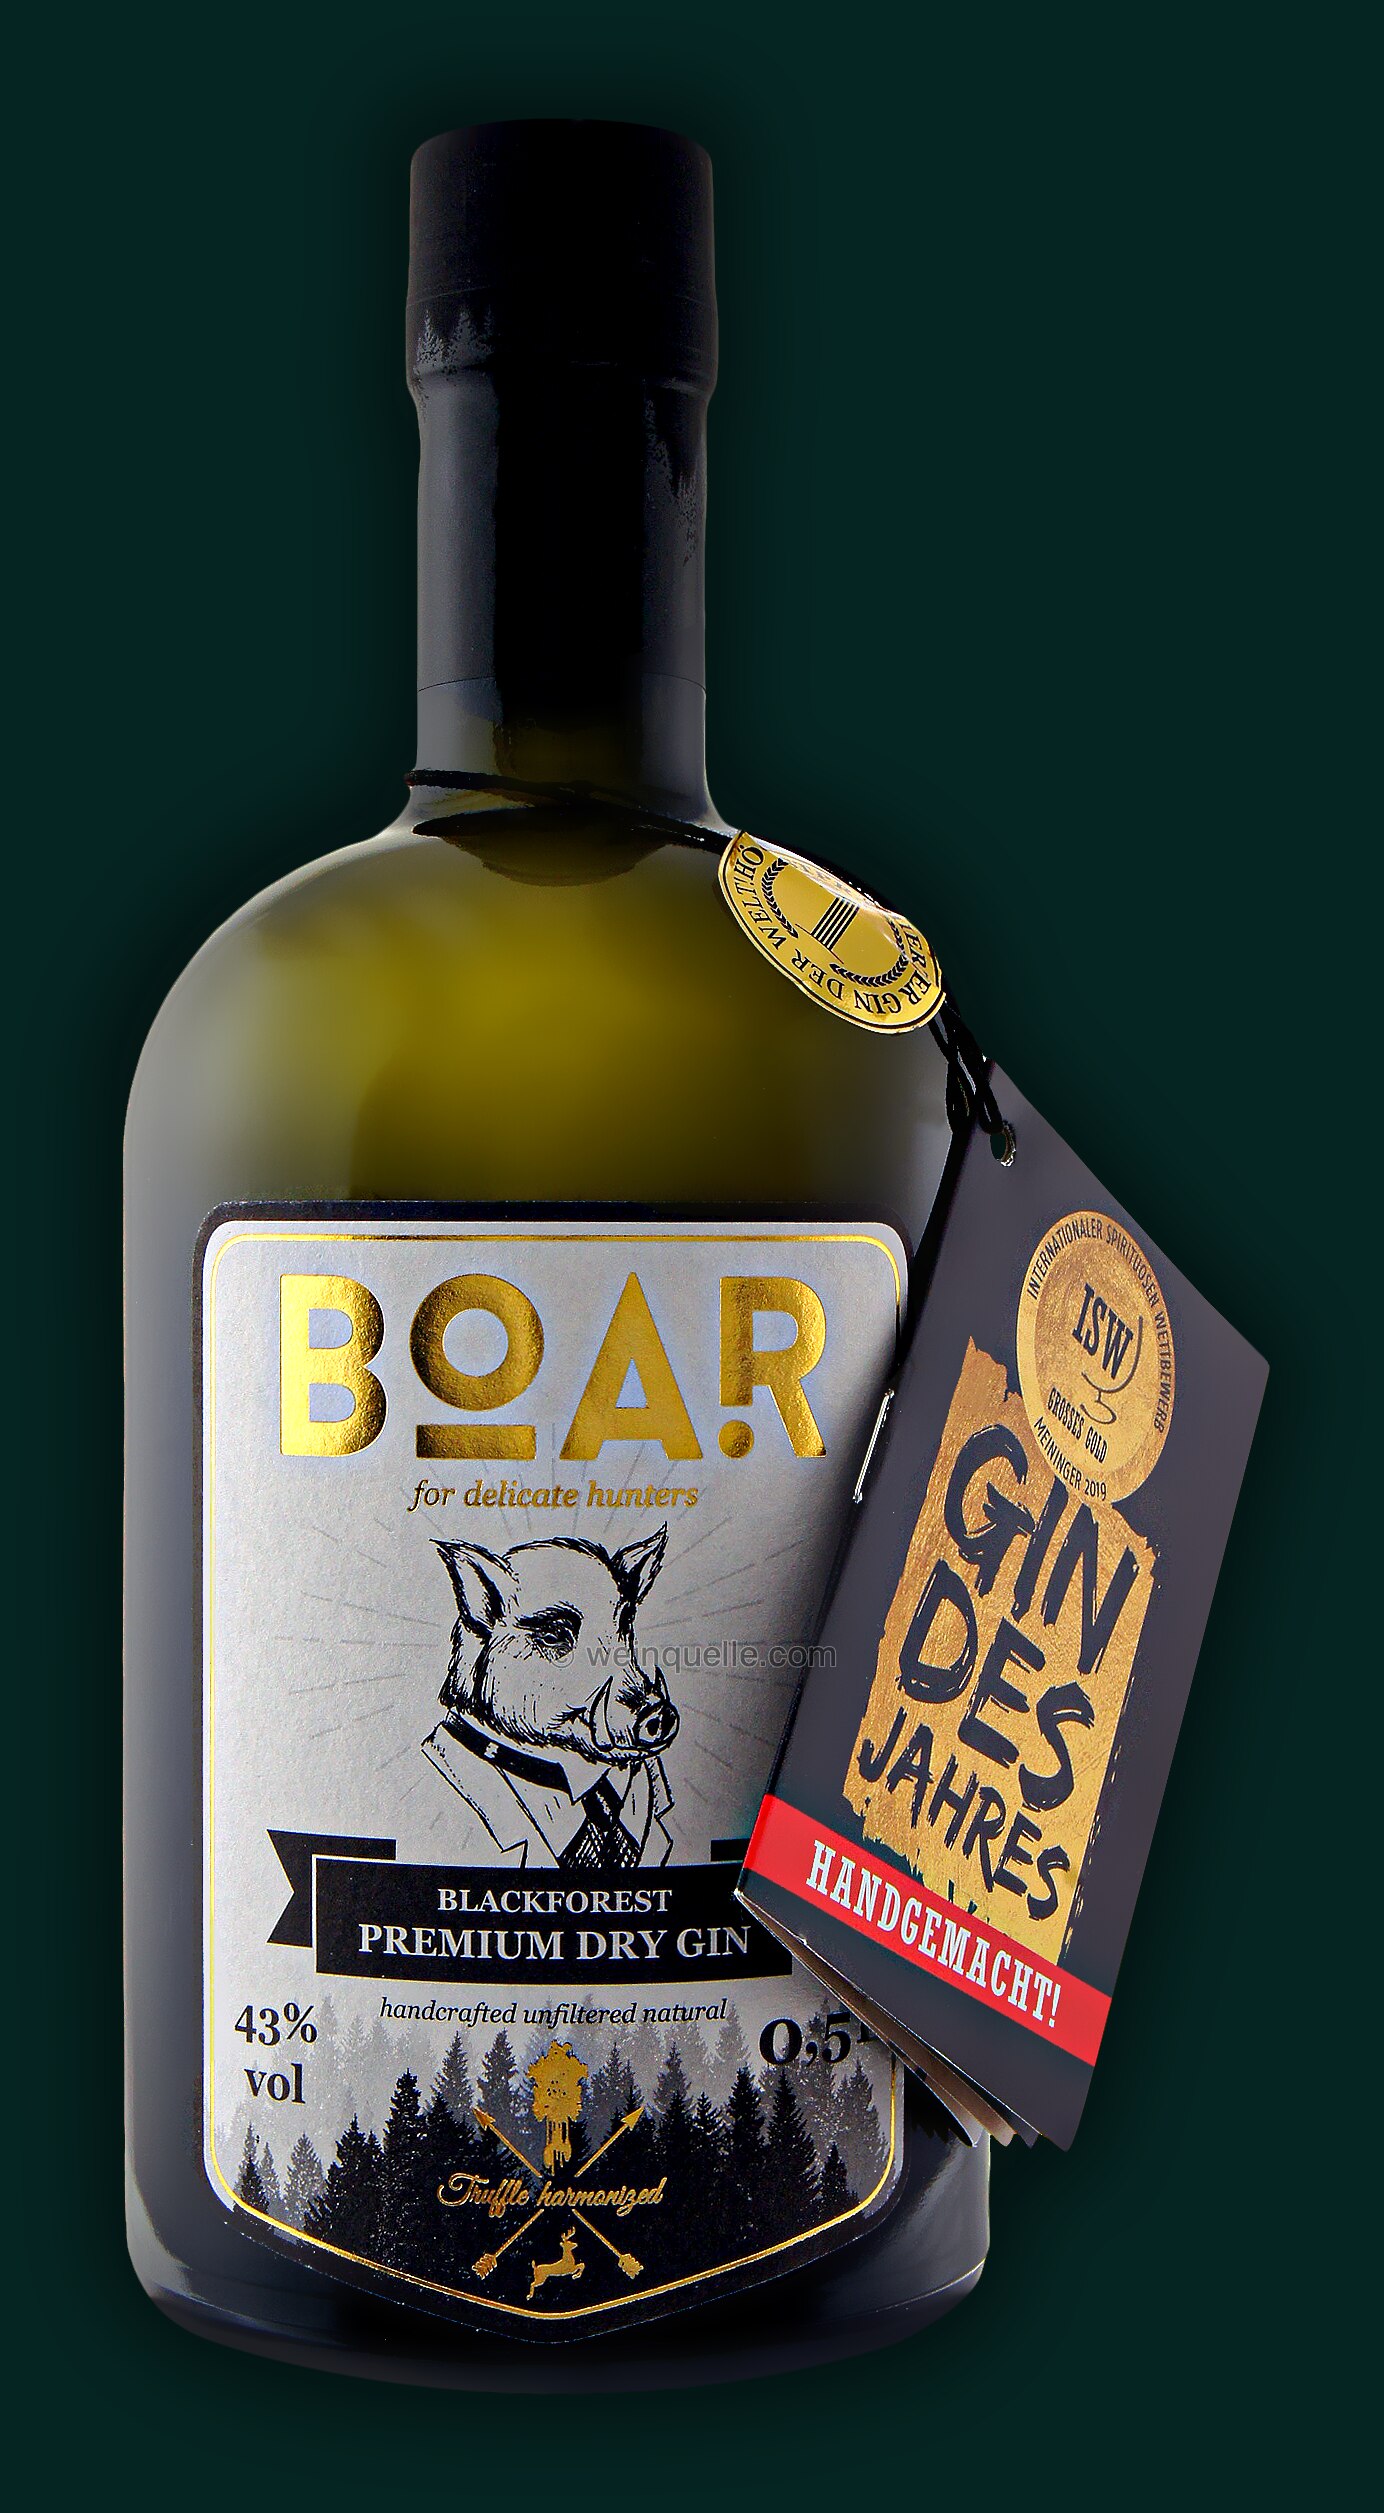 Boar Black Forest Premium Dry Gin 43%, 34,90 € - Weinquelle Lühmann | Gin